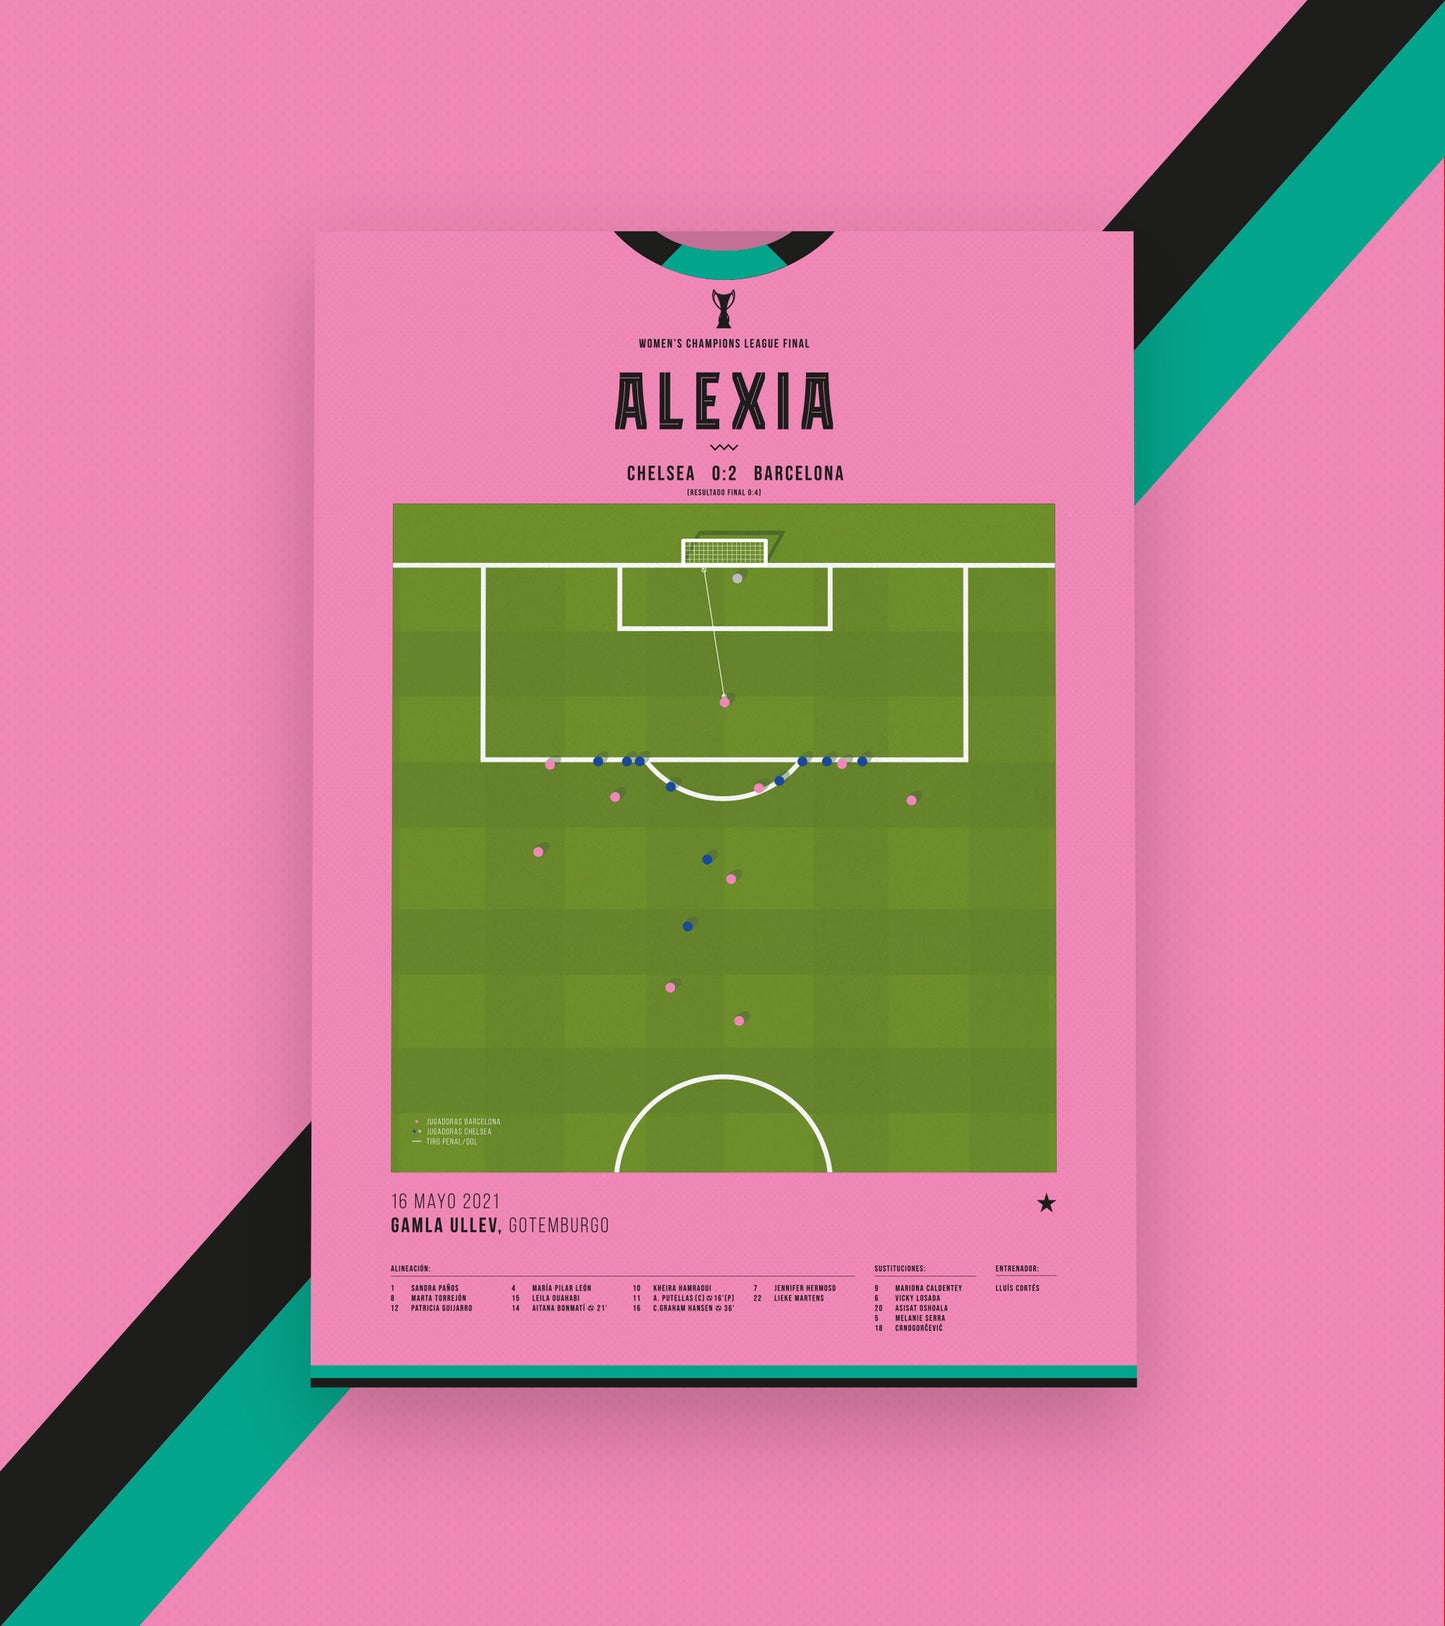 Alexia Putellas' goal in the Women's Champions League Final